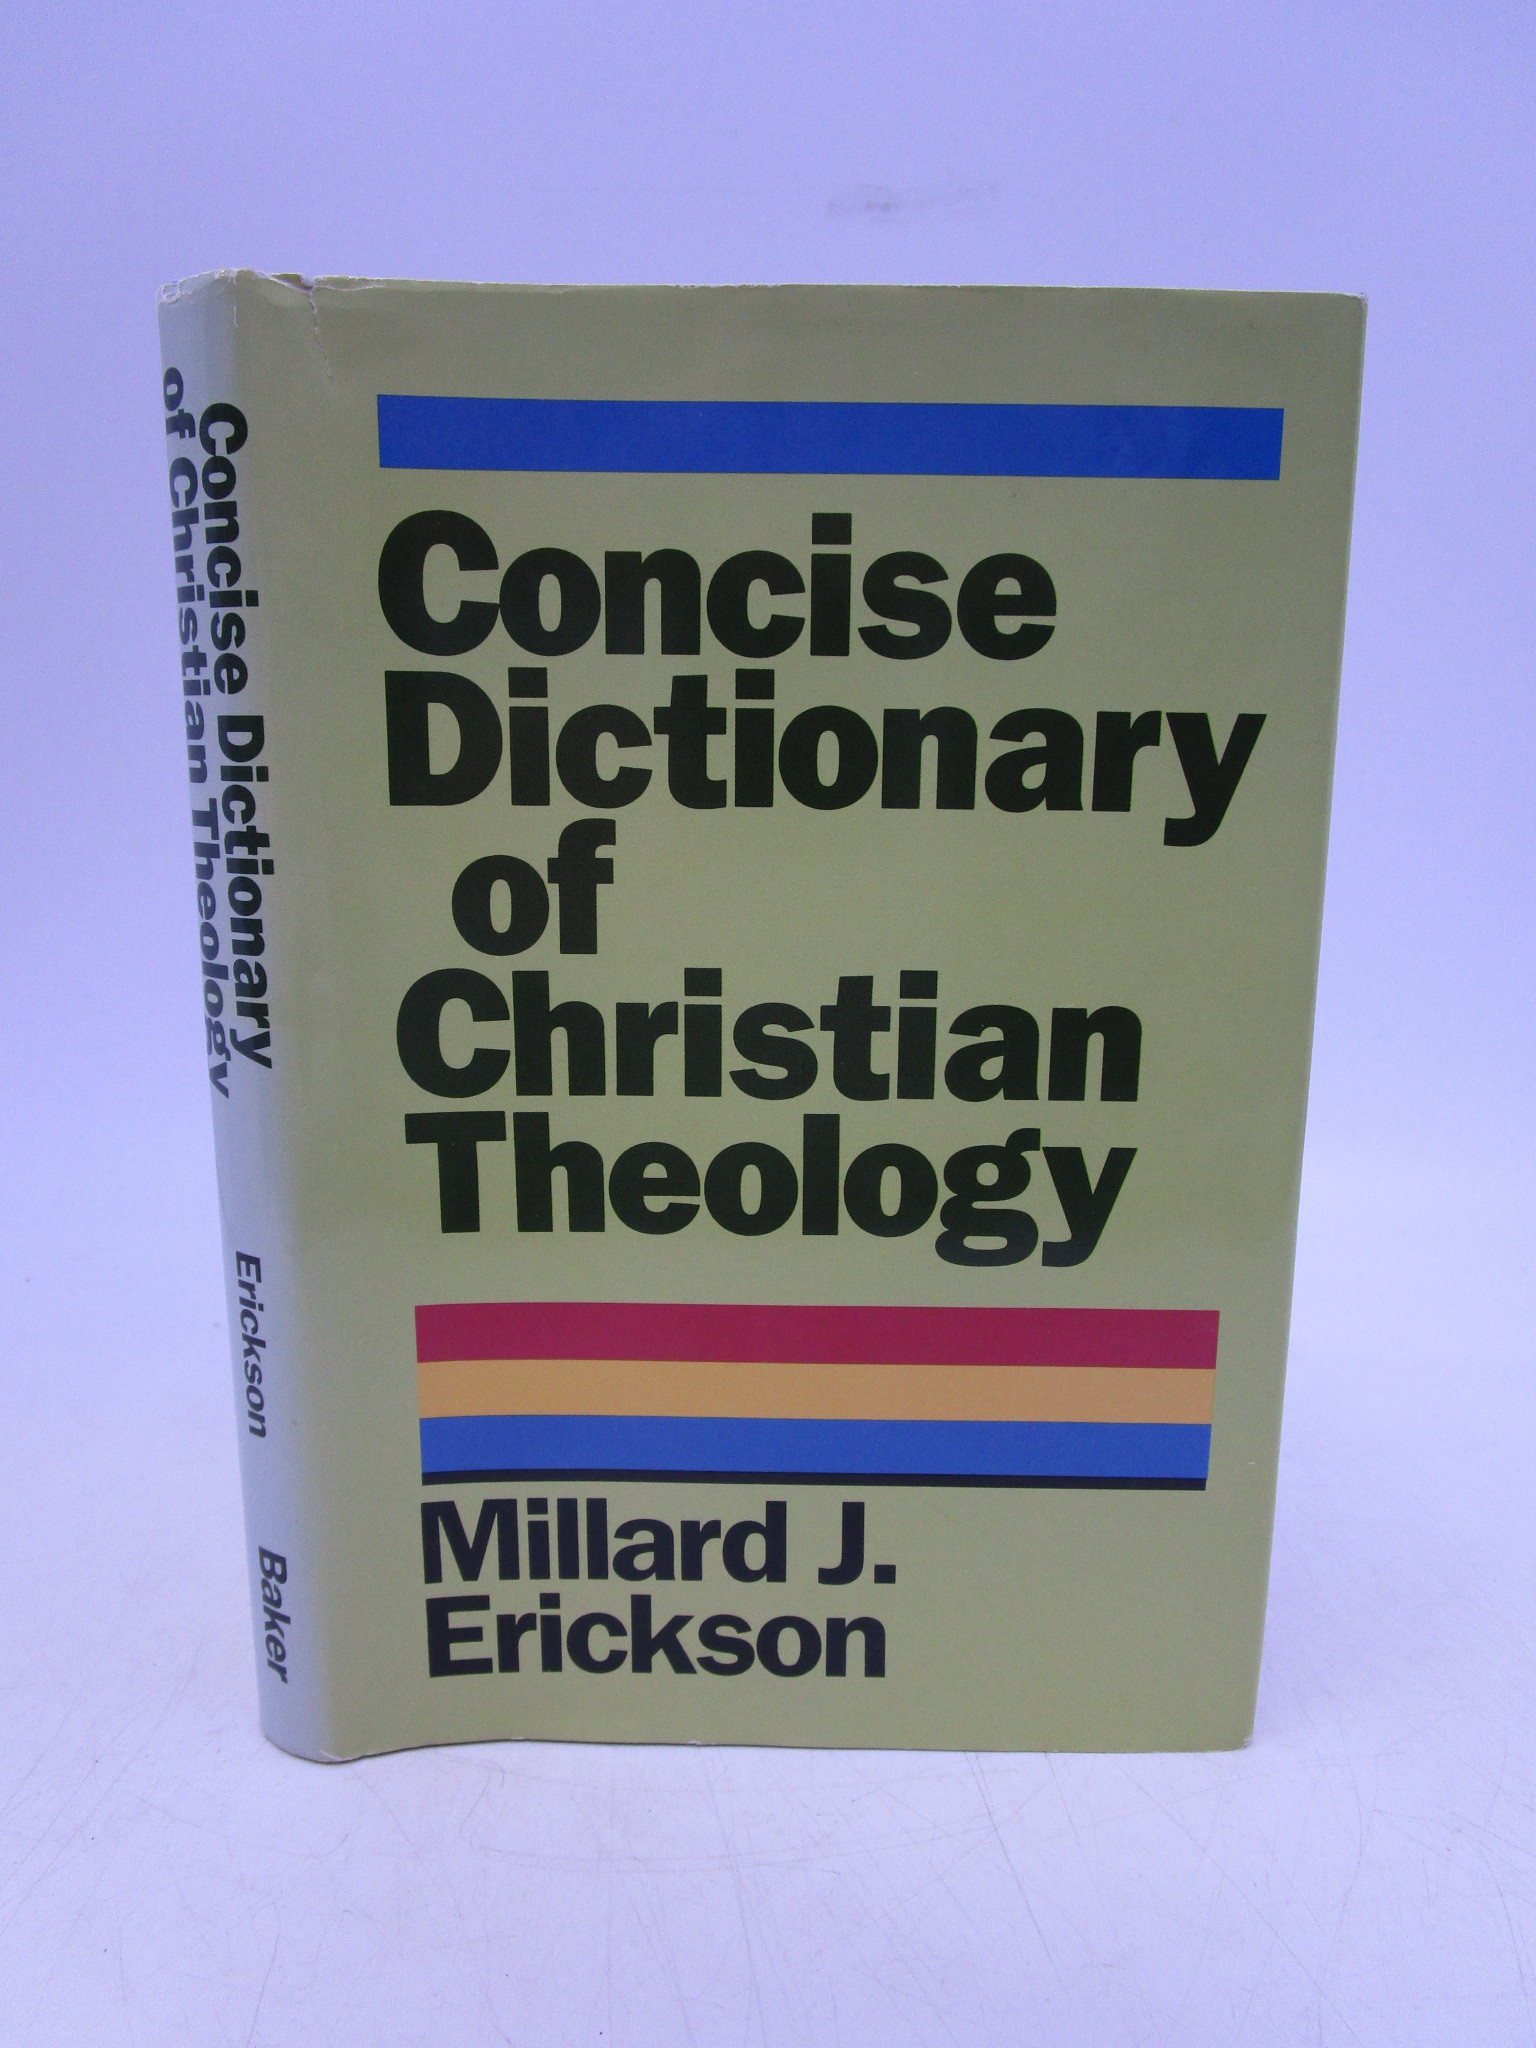 Concise Dictionary of Christian Theology - Erickson, Millard J.